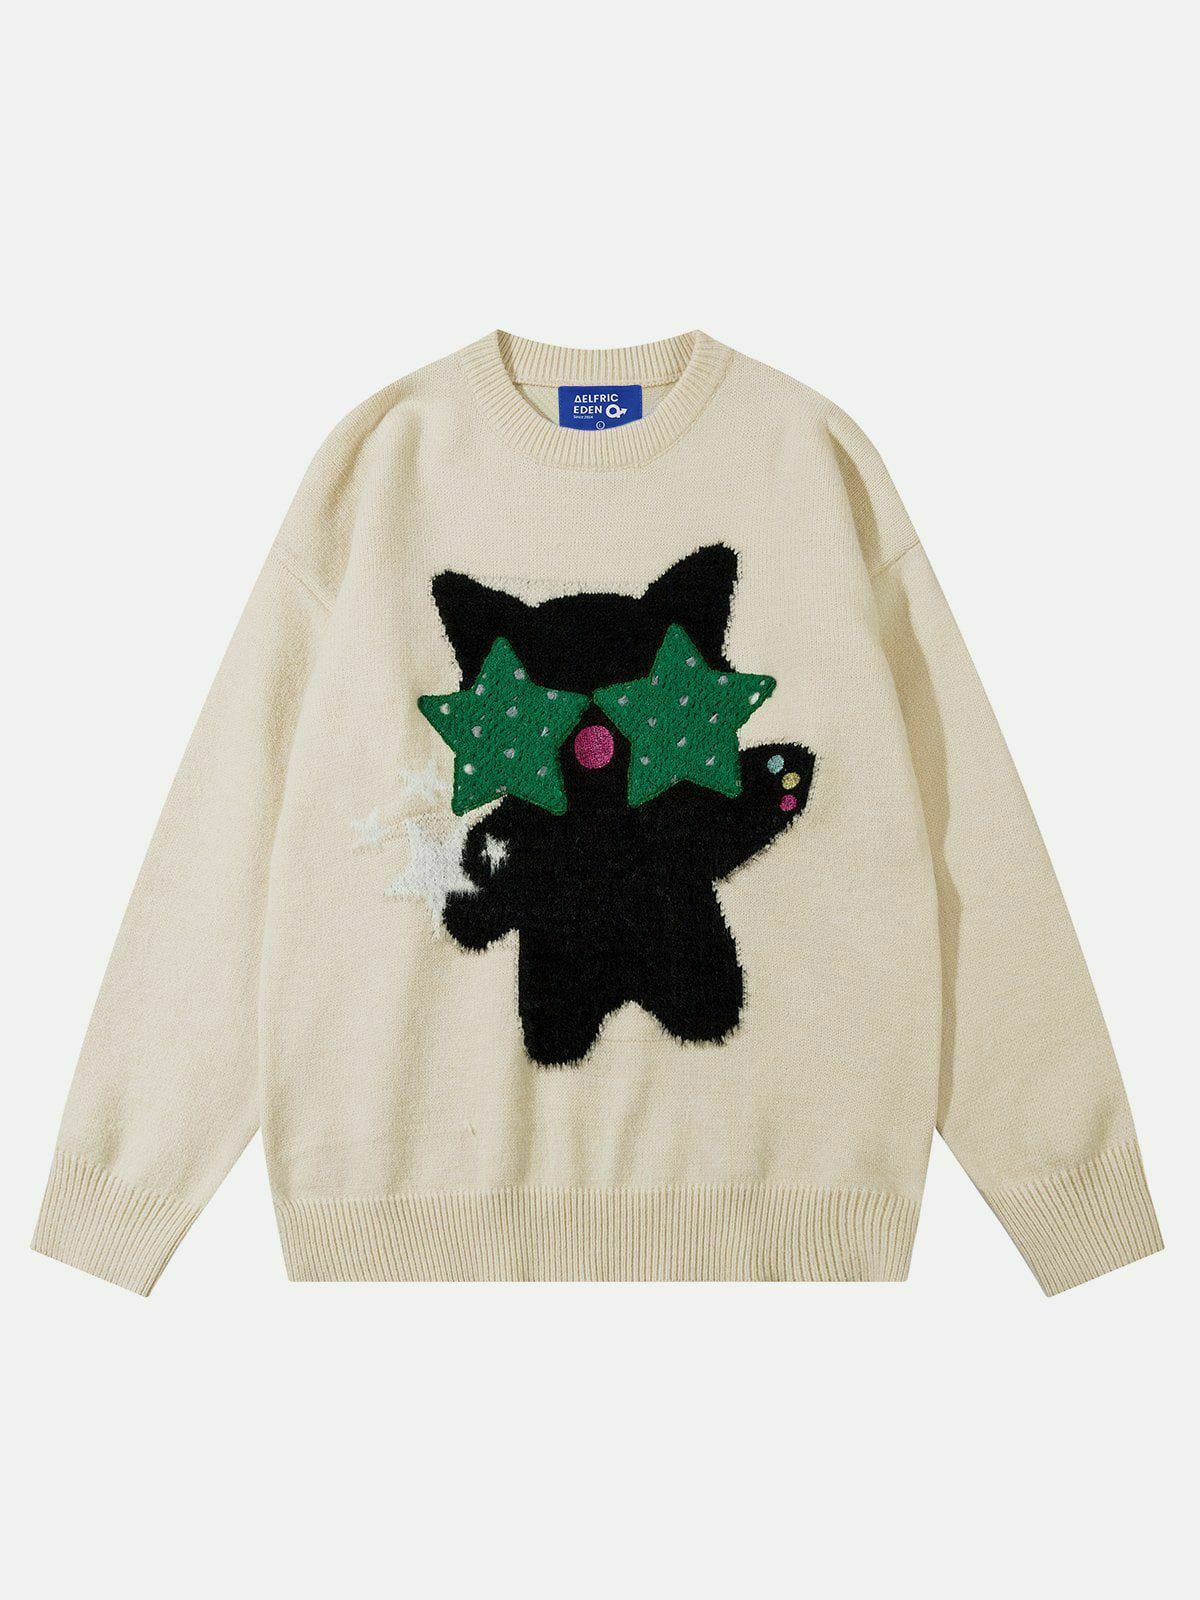 chic cat jacquard sweater   youthful & trendy design 8834